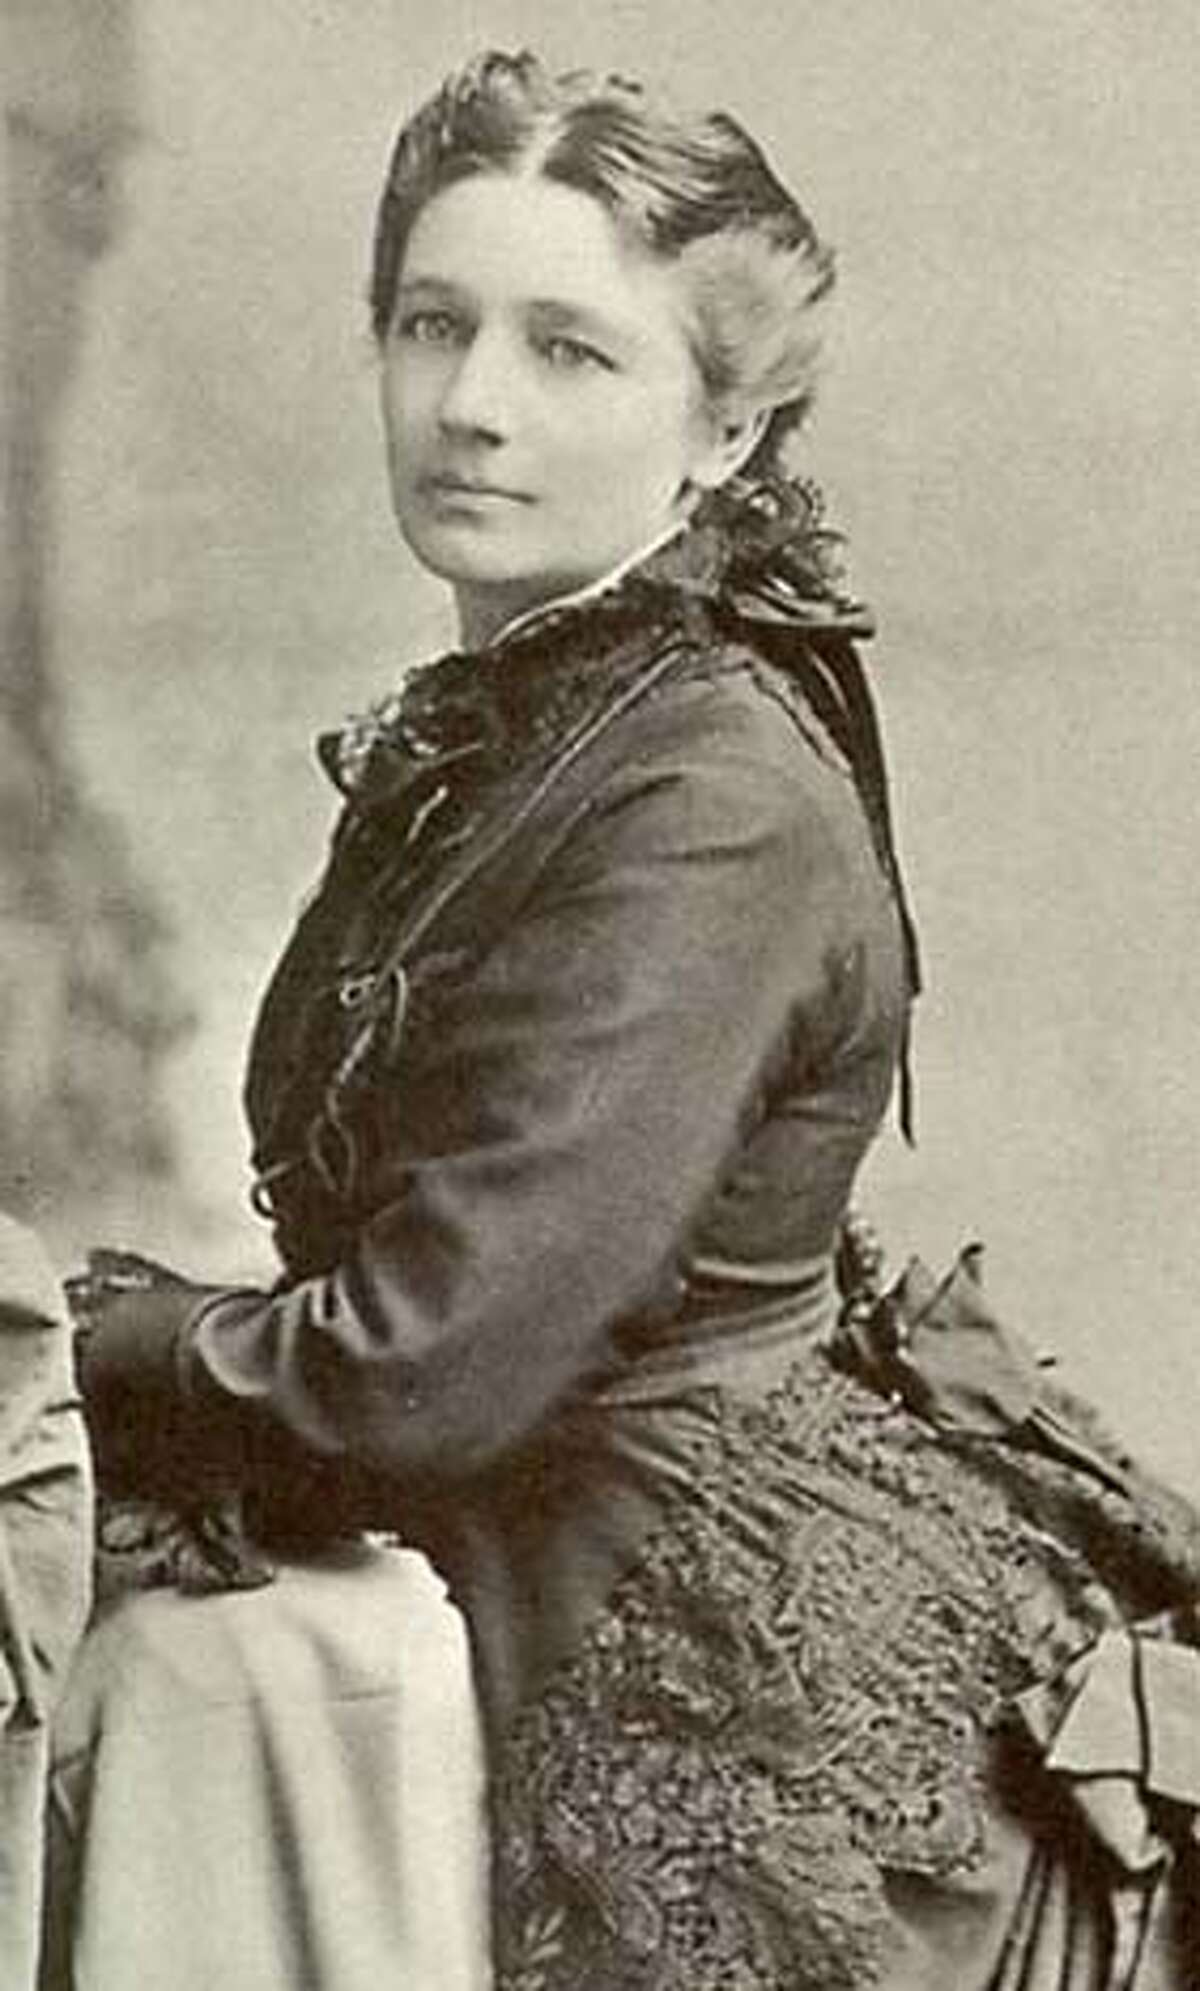 Feminist precursor Victoria Woodhull